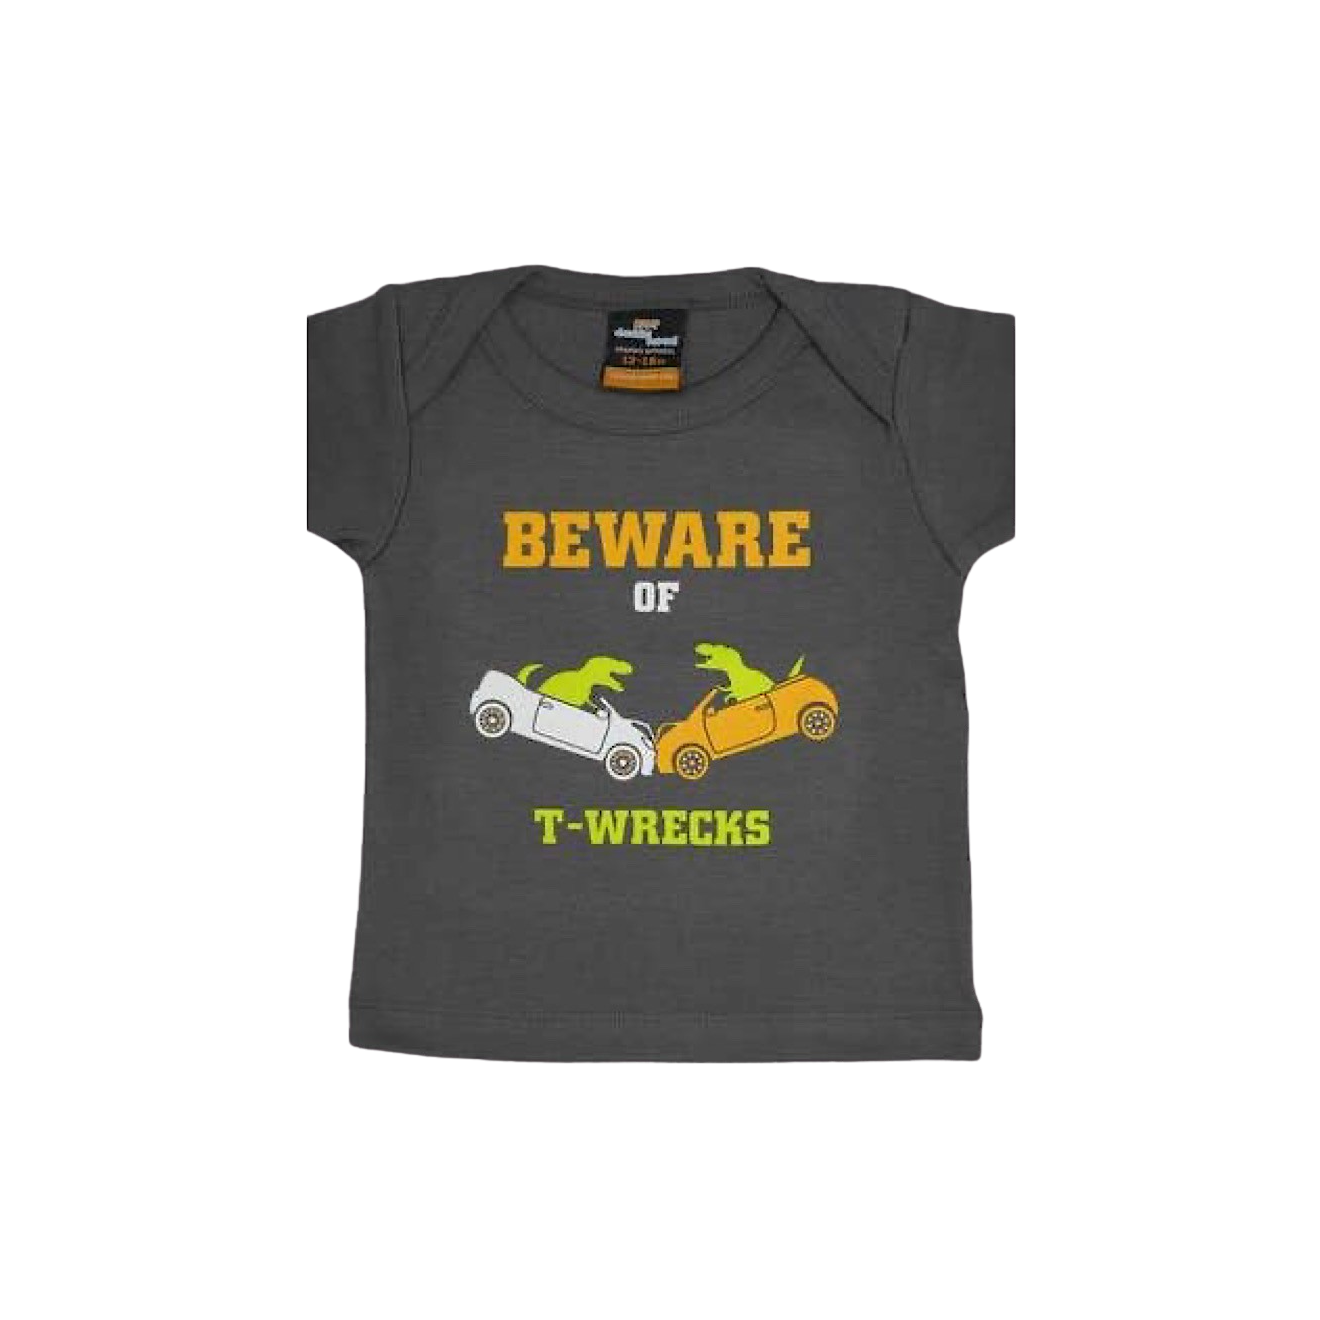 Beware Of T-wrecks T-Shirt